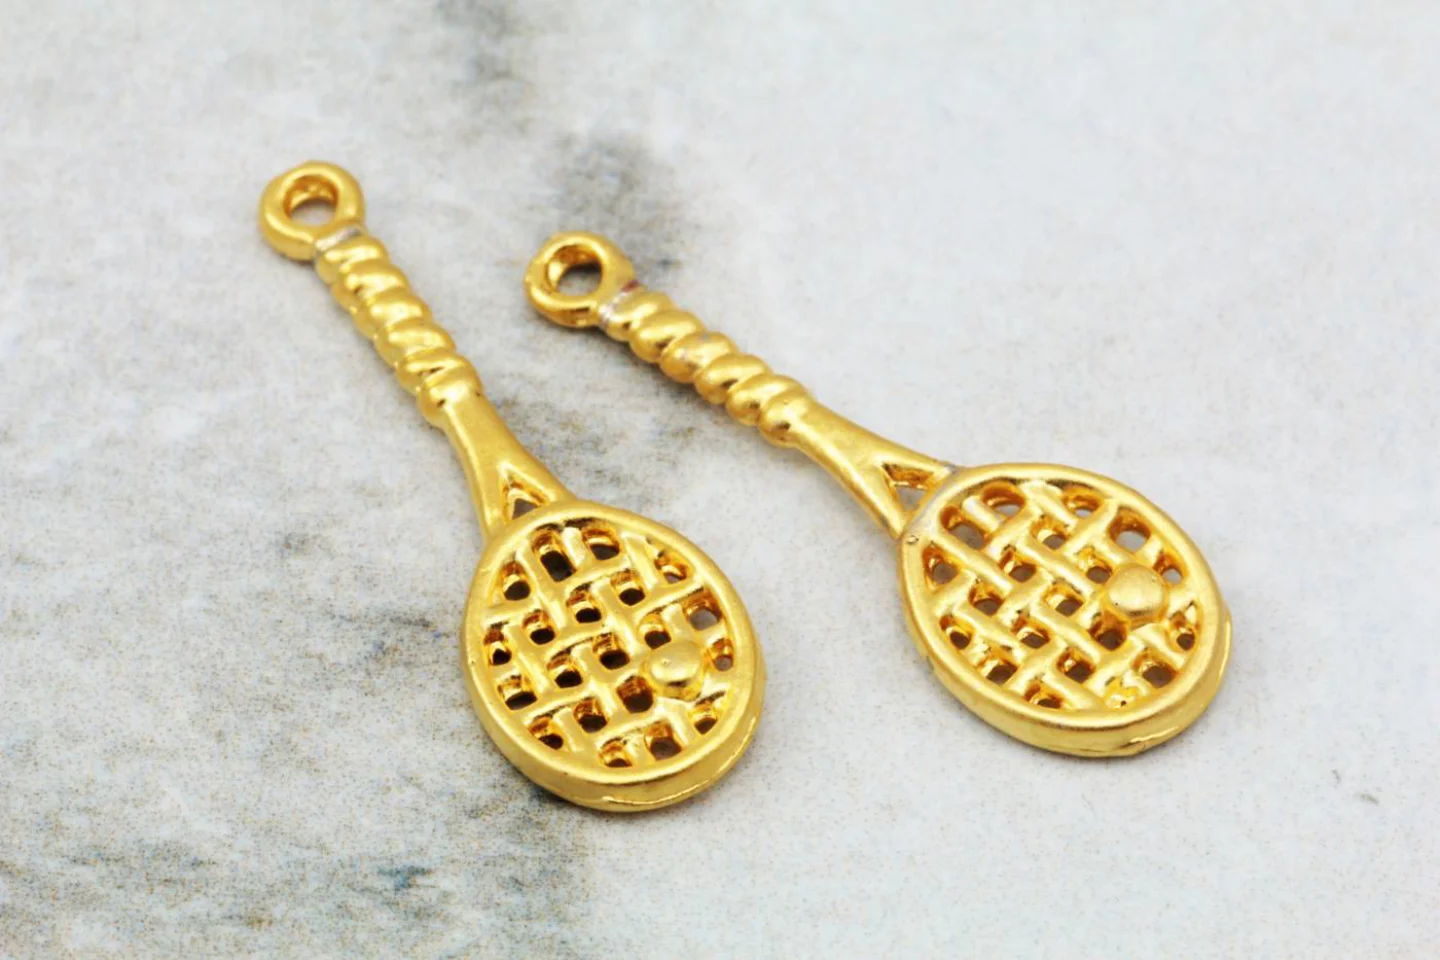 gold-plated-metal-tennis-racket-pendants.